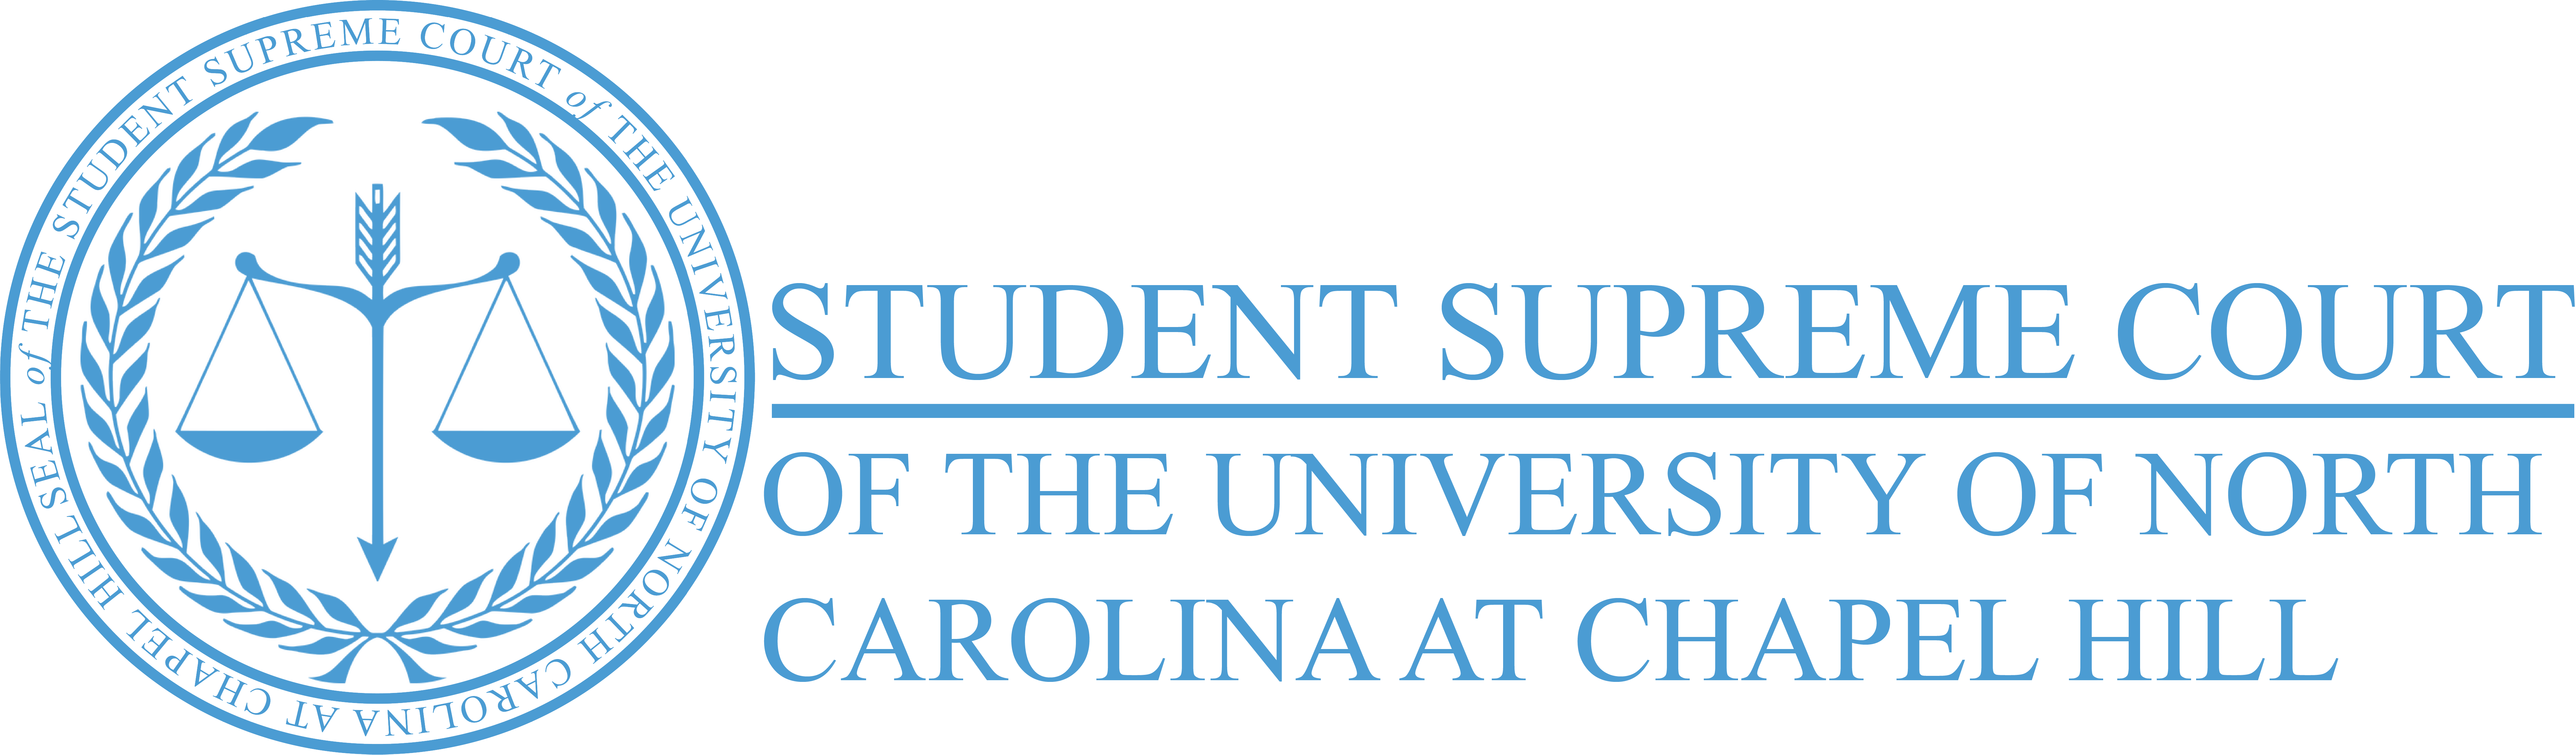 UNC Student Supreme Court